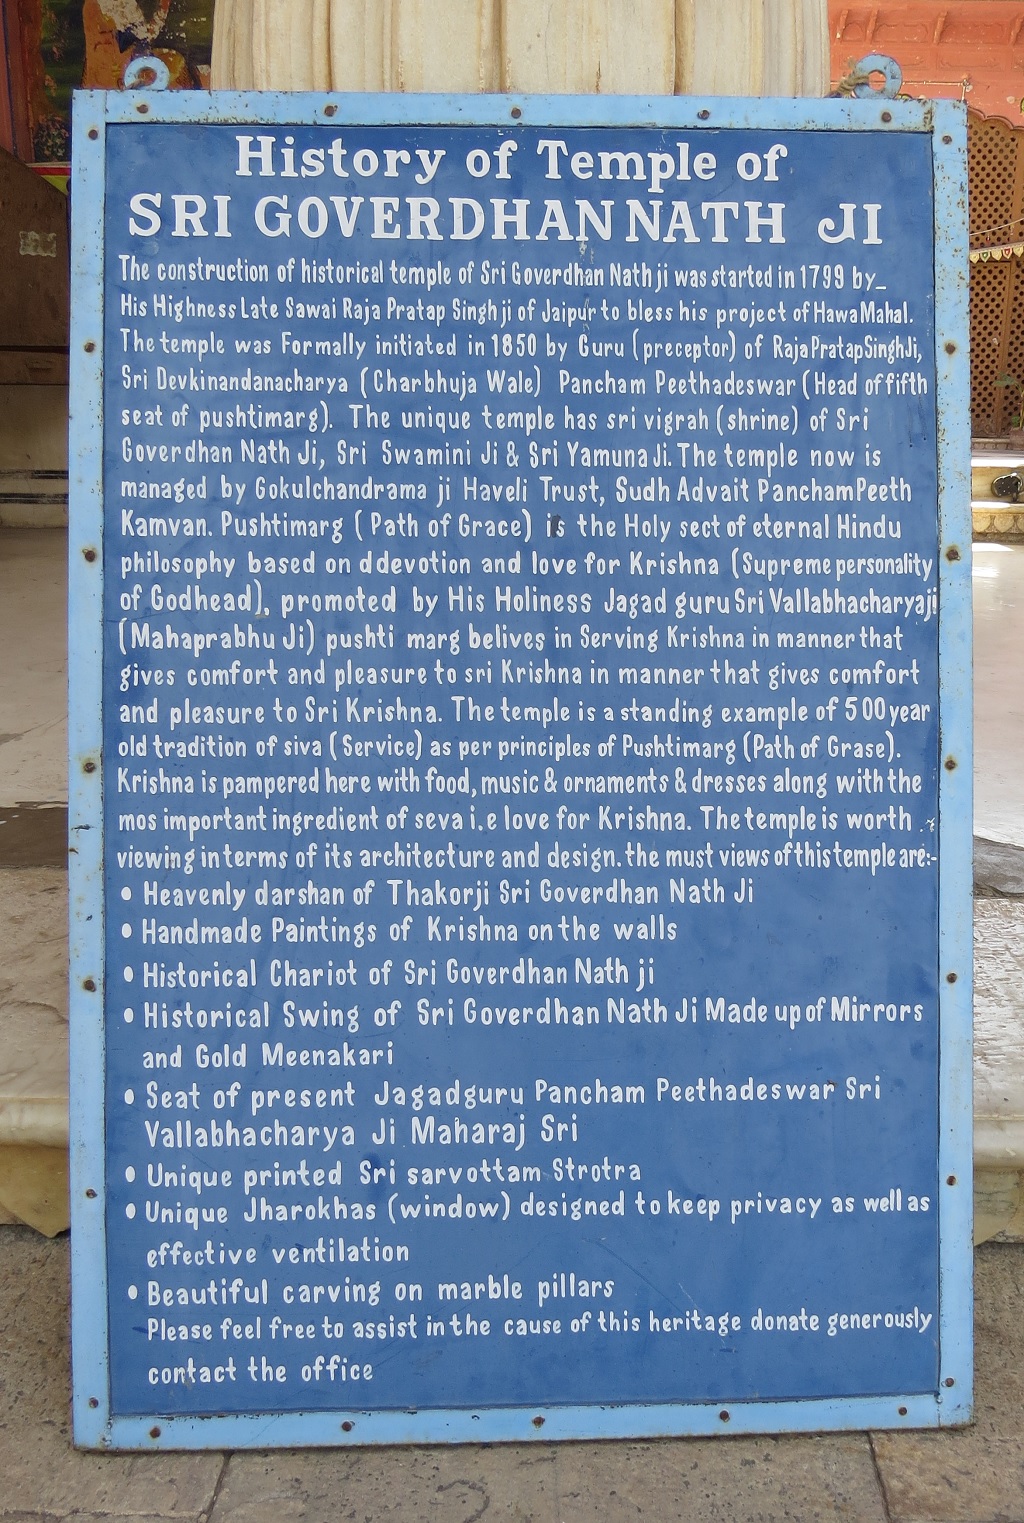 History of Temple of Sri Goverdhan Nath Ji – Built in 1799